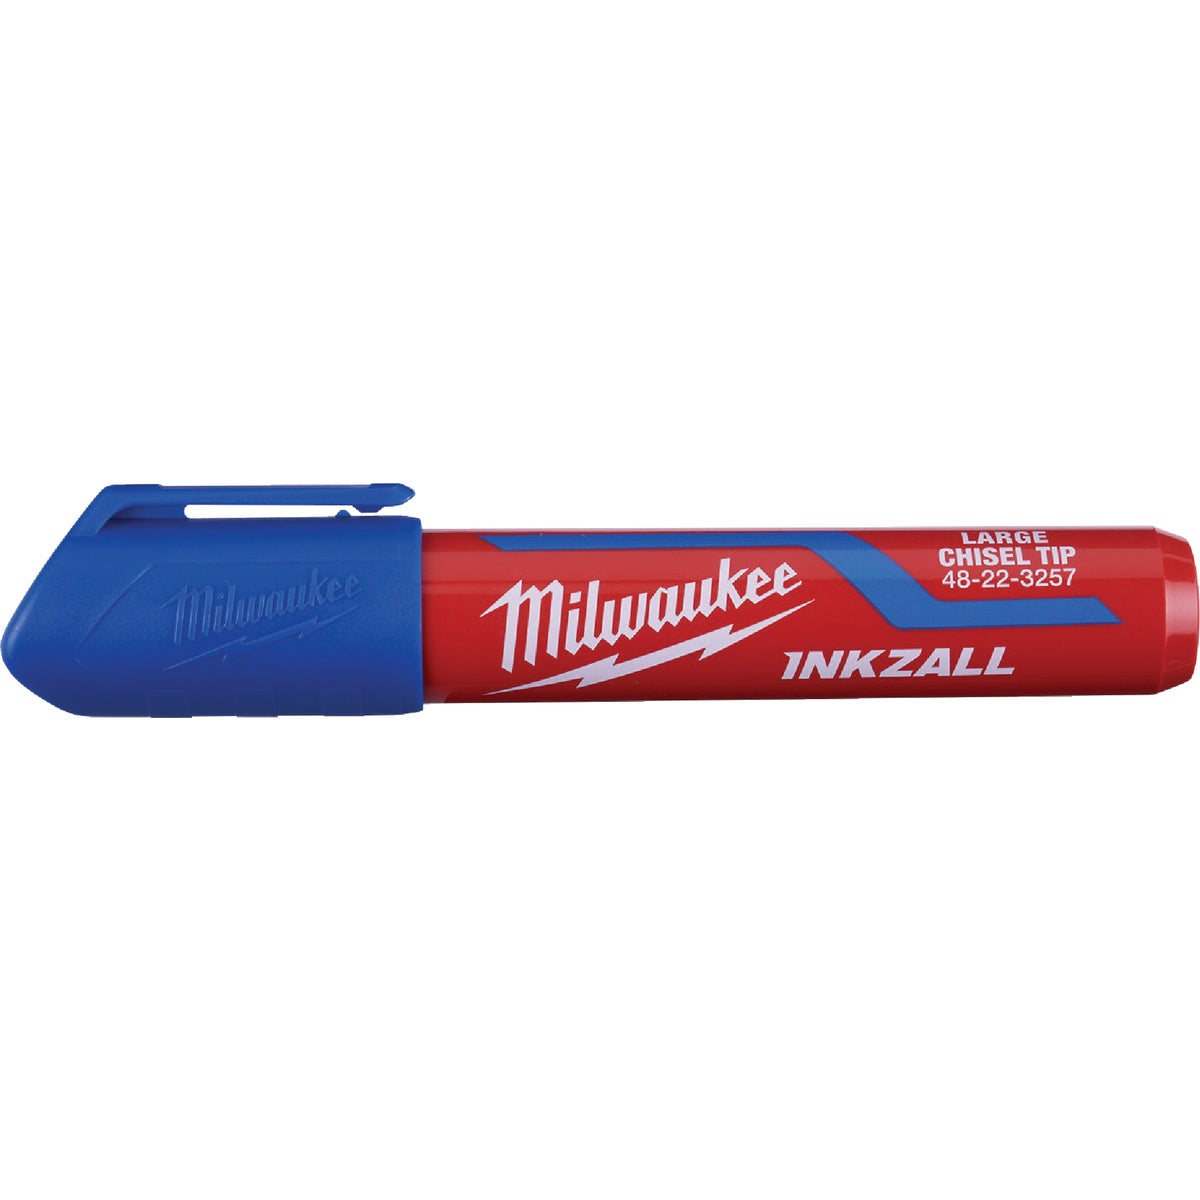 Milwaukee INKZALL Large Chisel Tip Blue Job Site Marker